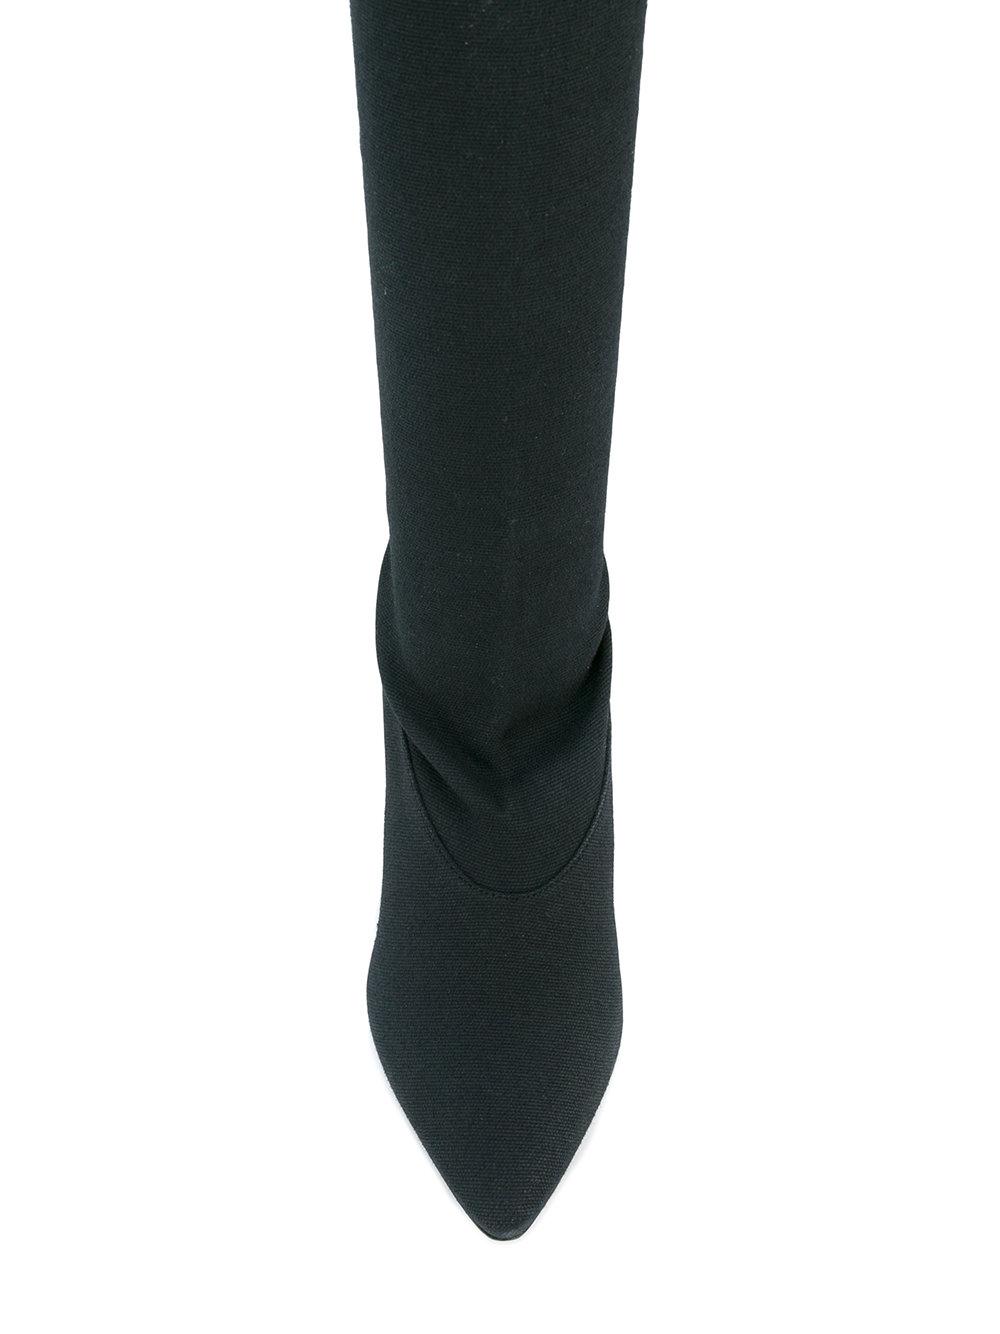 Yeezy Season 4 Thigh-high Sock Boots in Black | Lyst